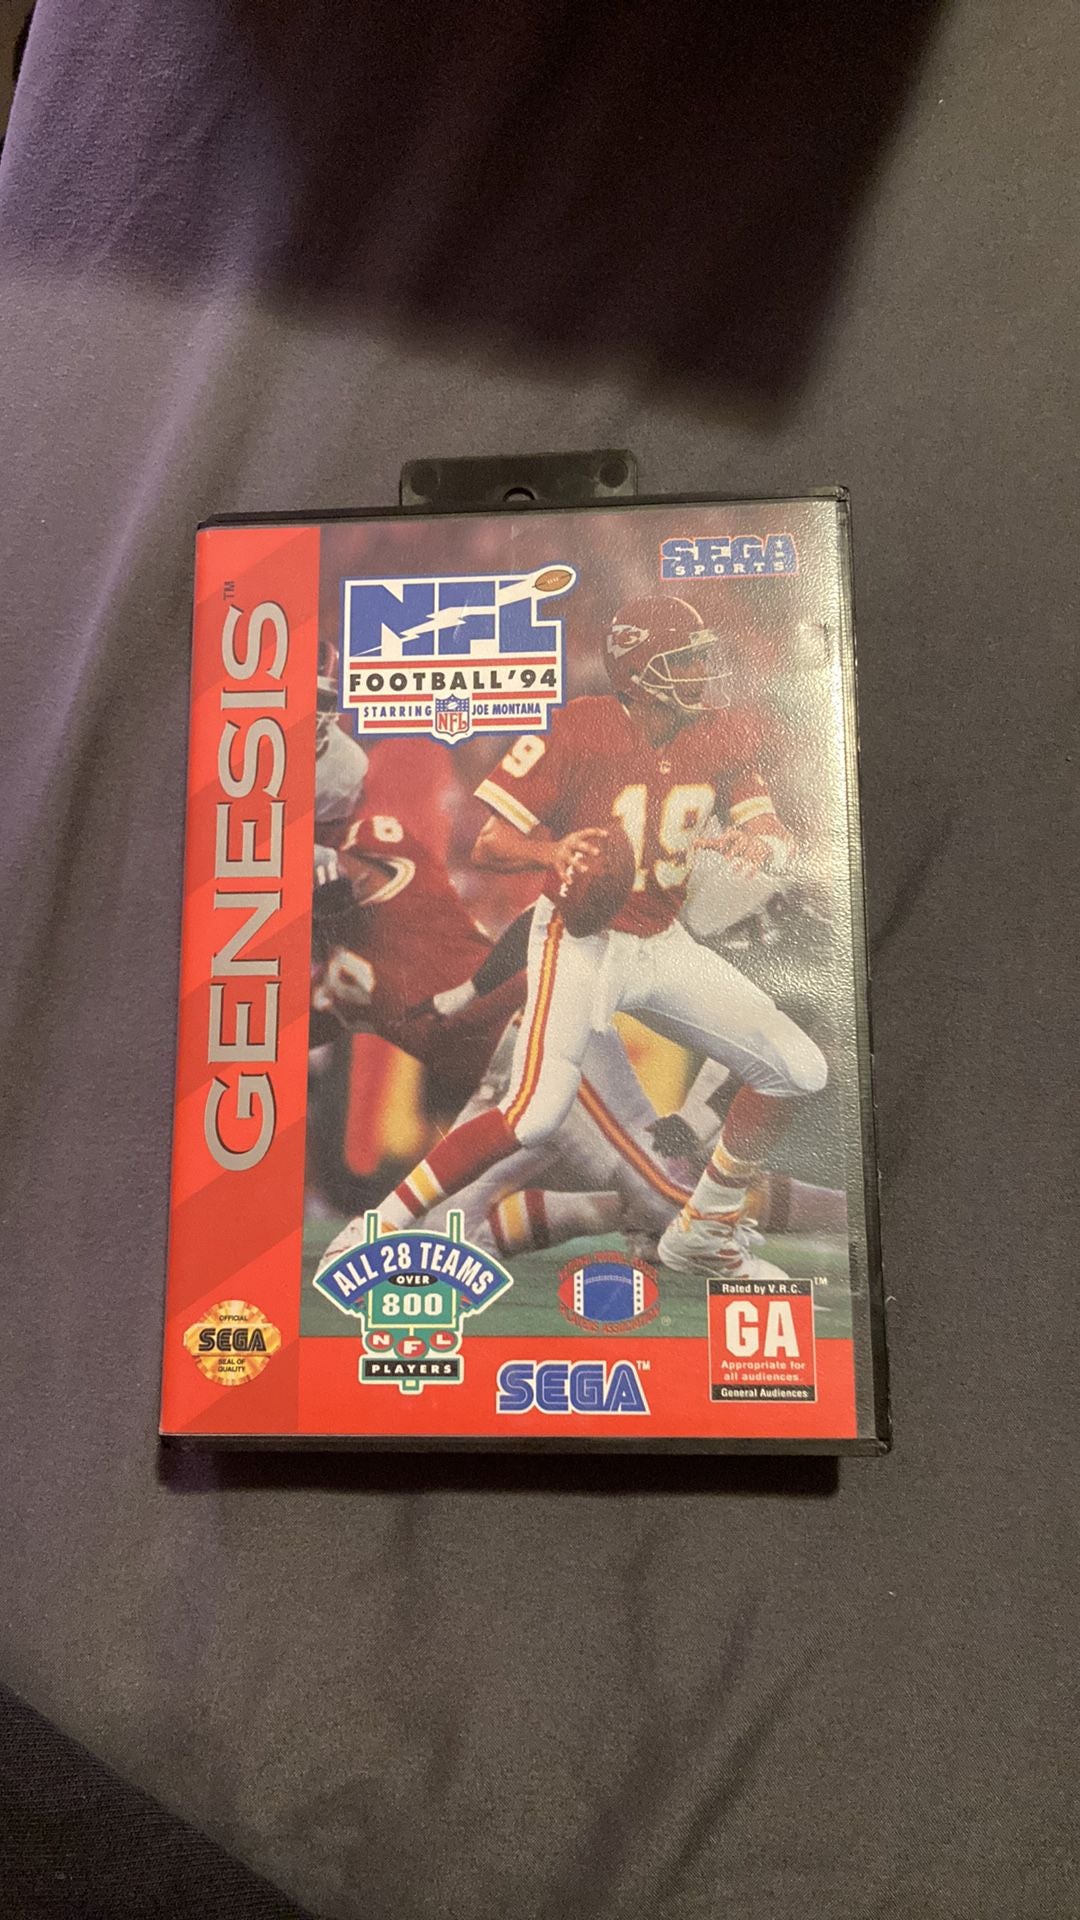 Sega Genesis - NFL Football ‘94 Starring Joe Montana